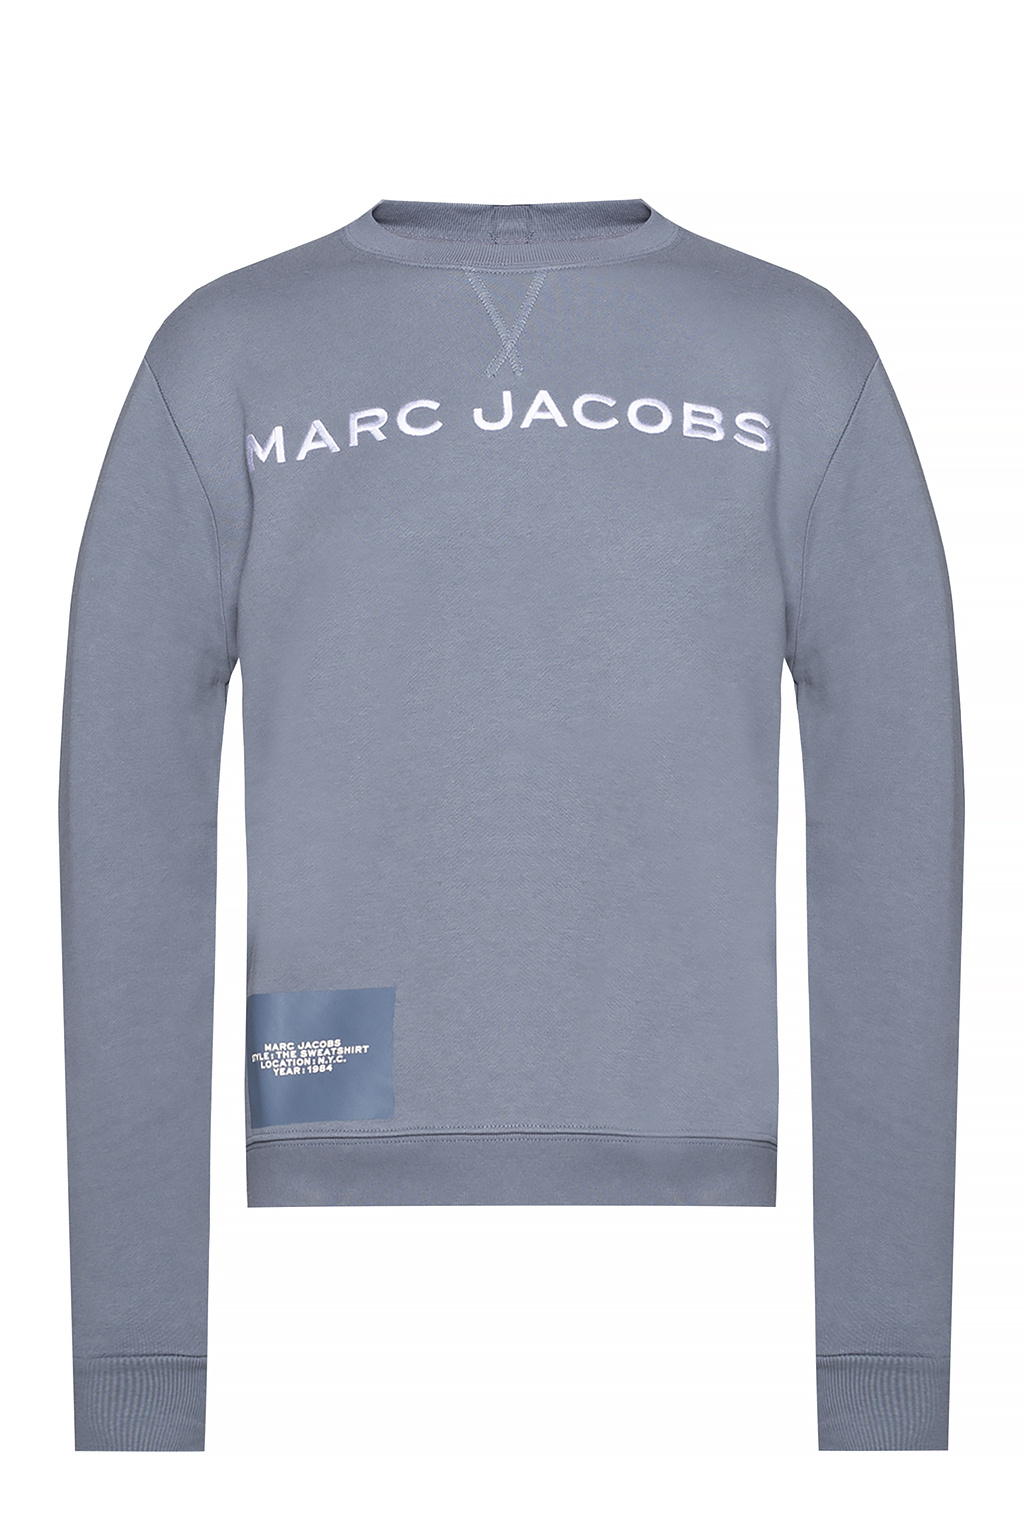 Marc Jacobs (The) marc jacobs shift dress